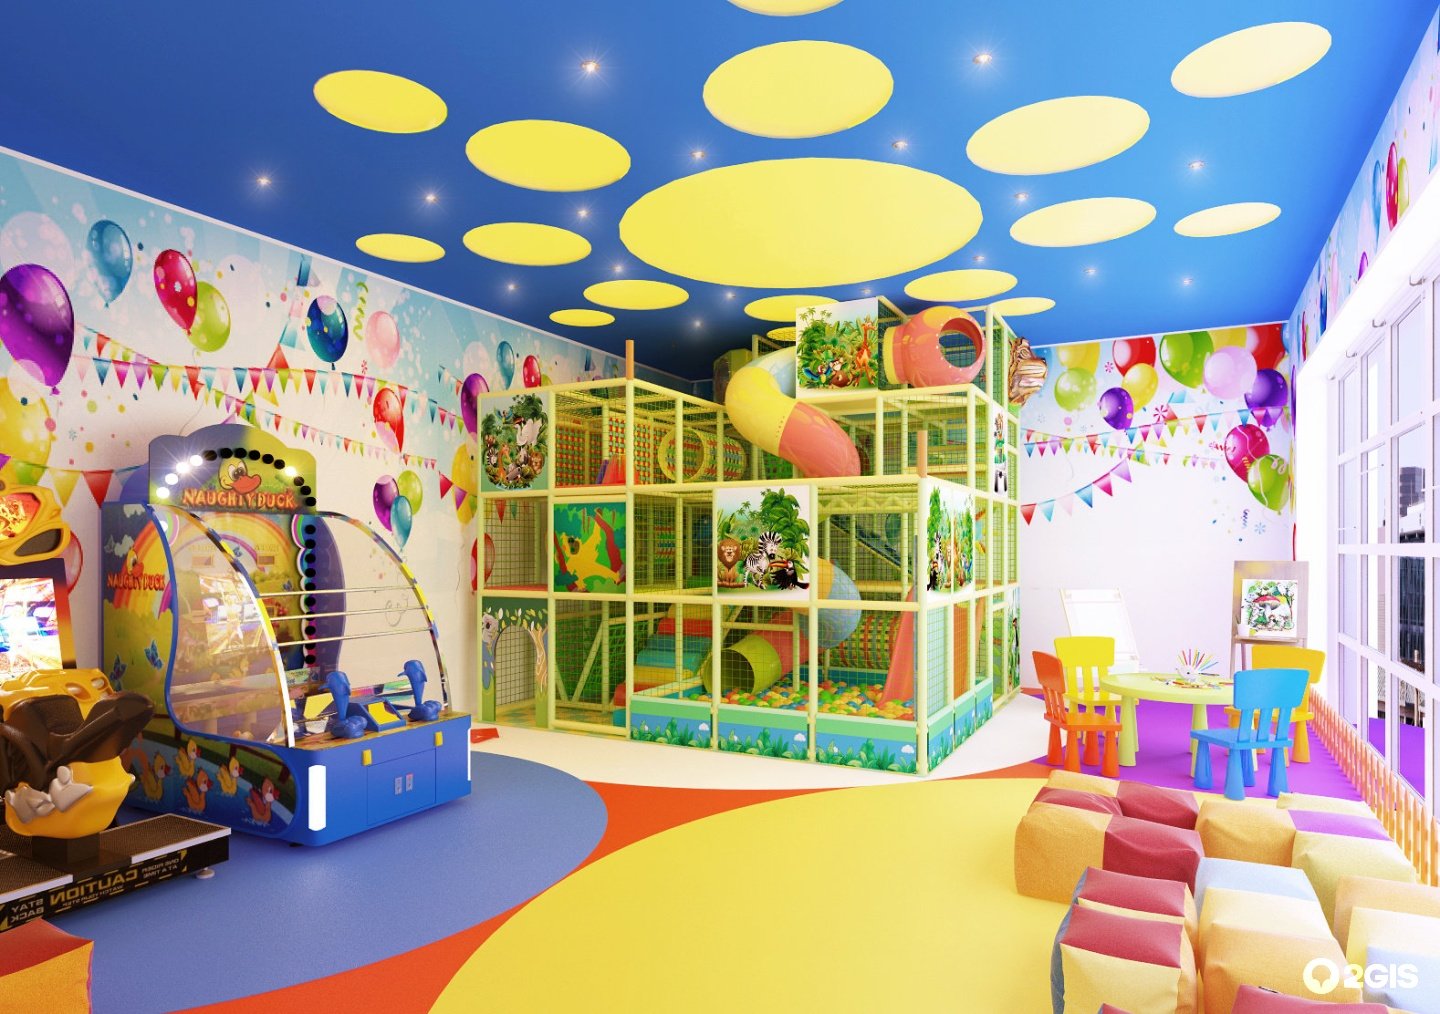 Комната развлечений. Детская игровая комната. Развлекательная комната для детей. Игровая комната для детей. Детский центр игровая комната.